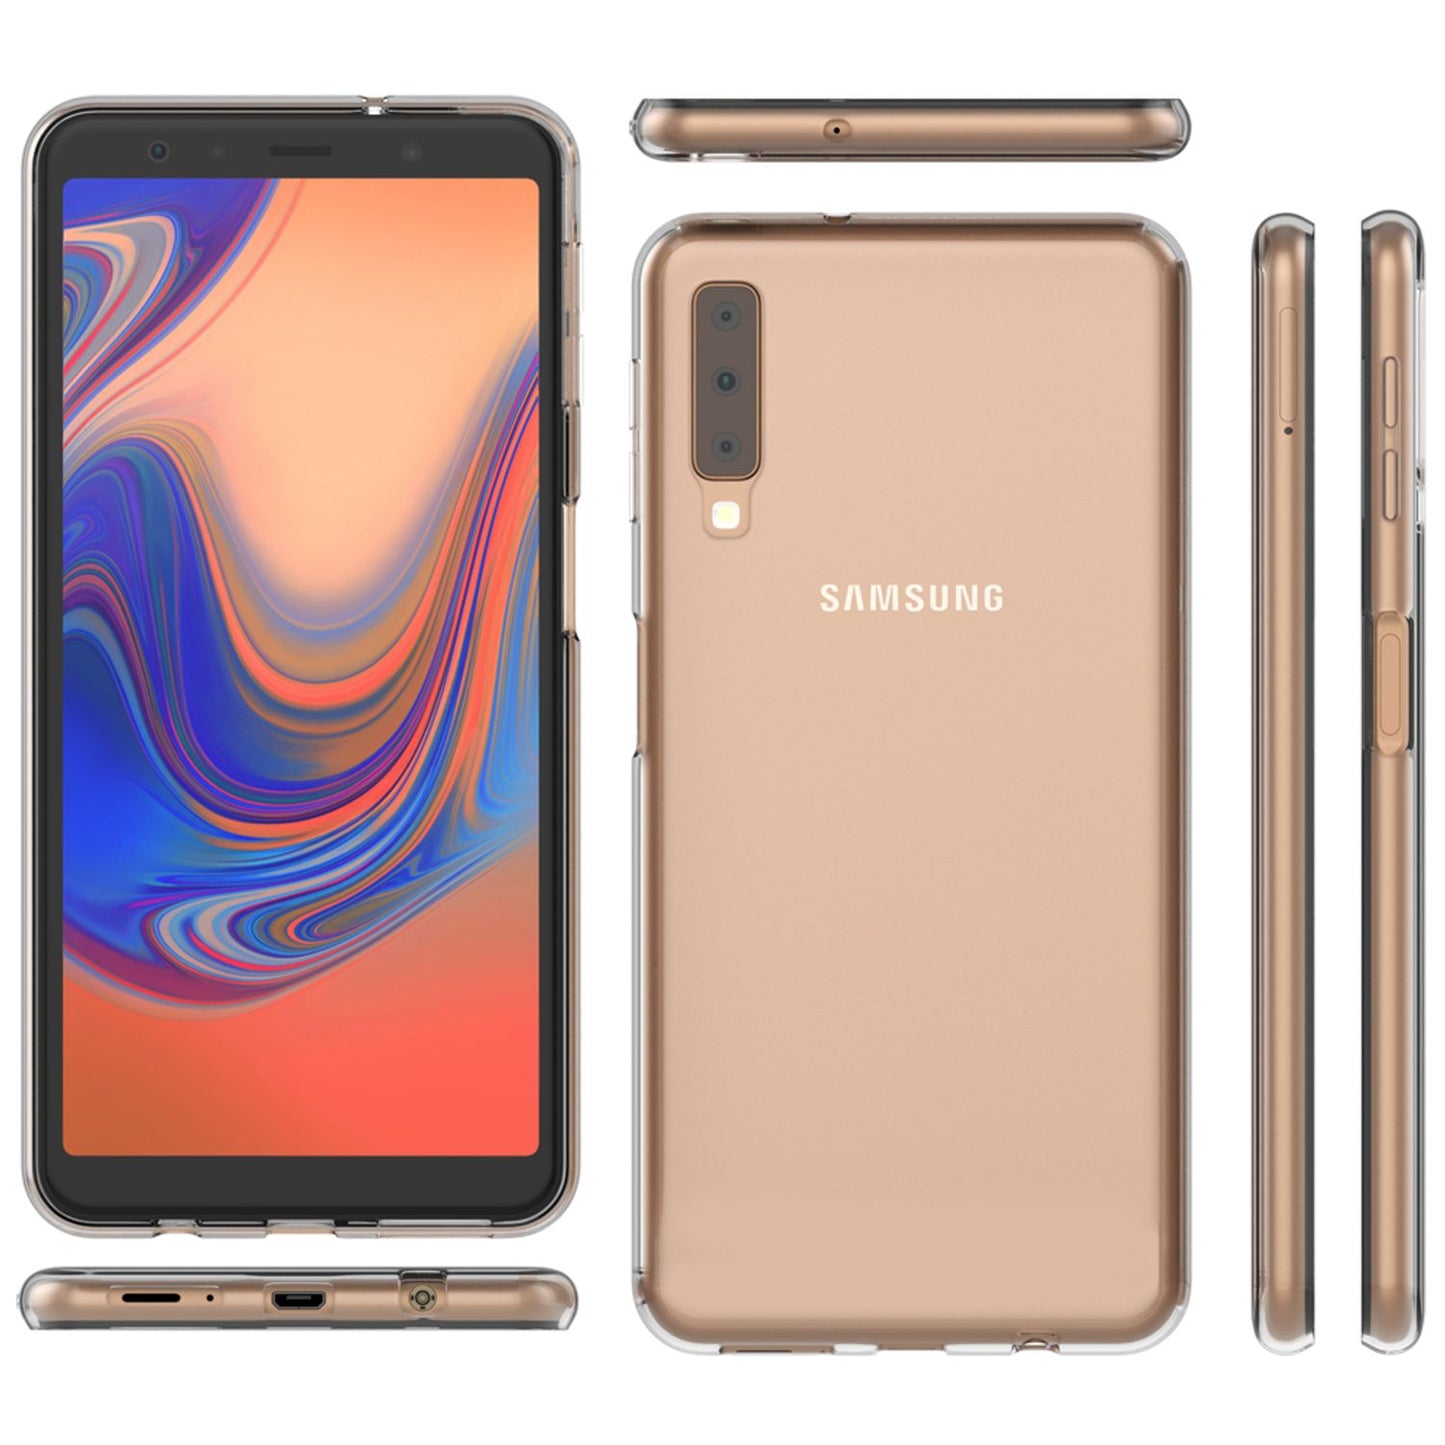 NALIA Handyhülle kompatibel mit Samsung Galaxy A7 (18), Hülle Silikon Case Cover